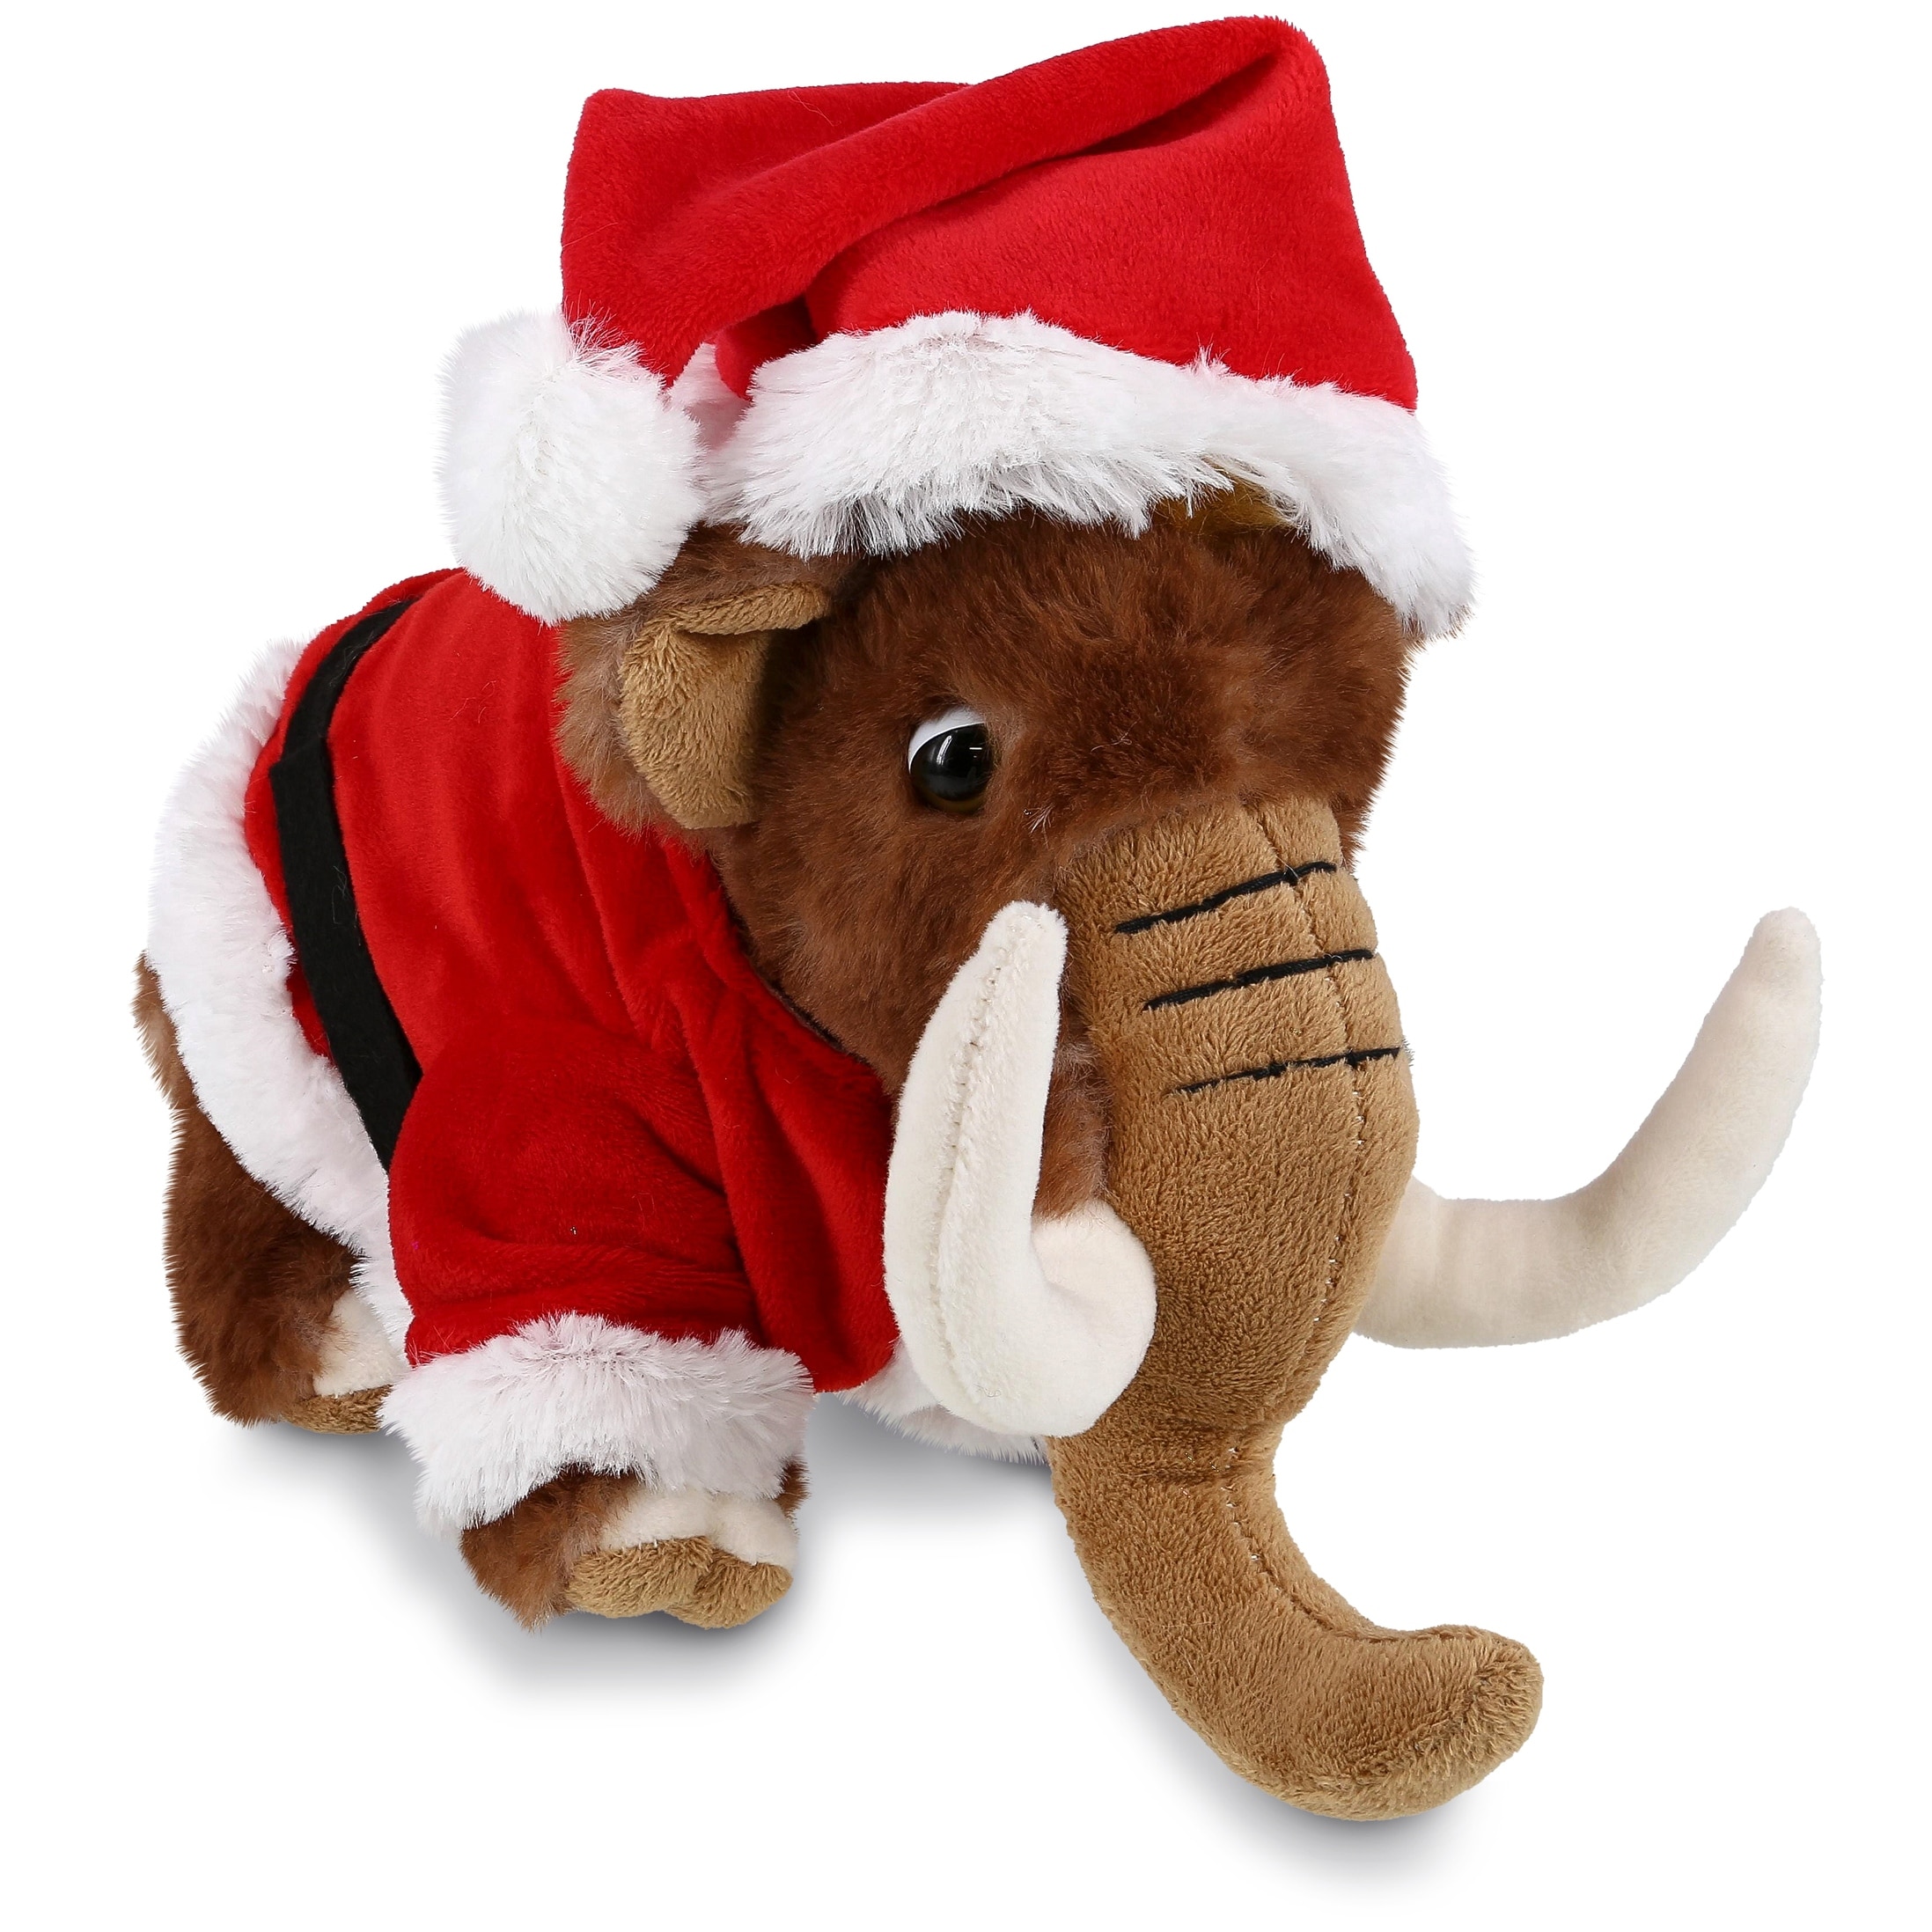 DolliBu Santa Wild Mammoth Stuffed Animal Plush Toy with Santa Outfit - 9 inches